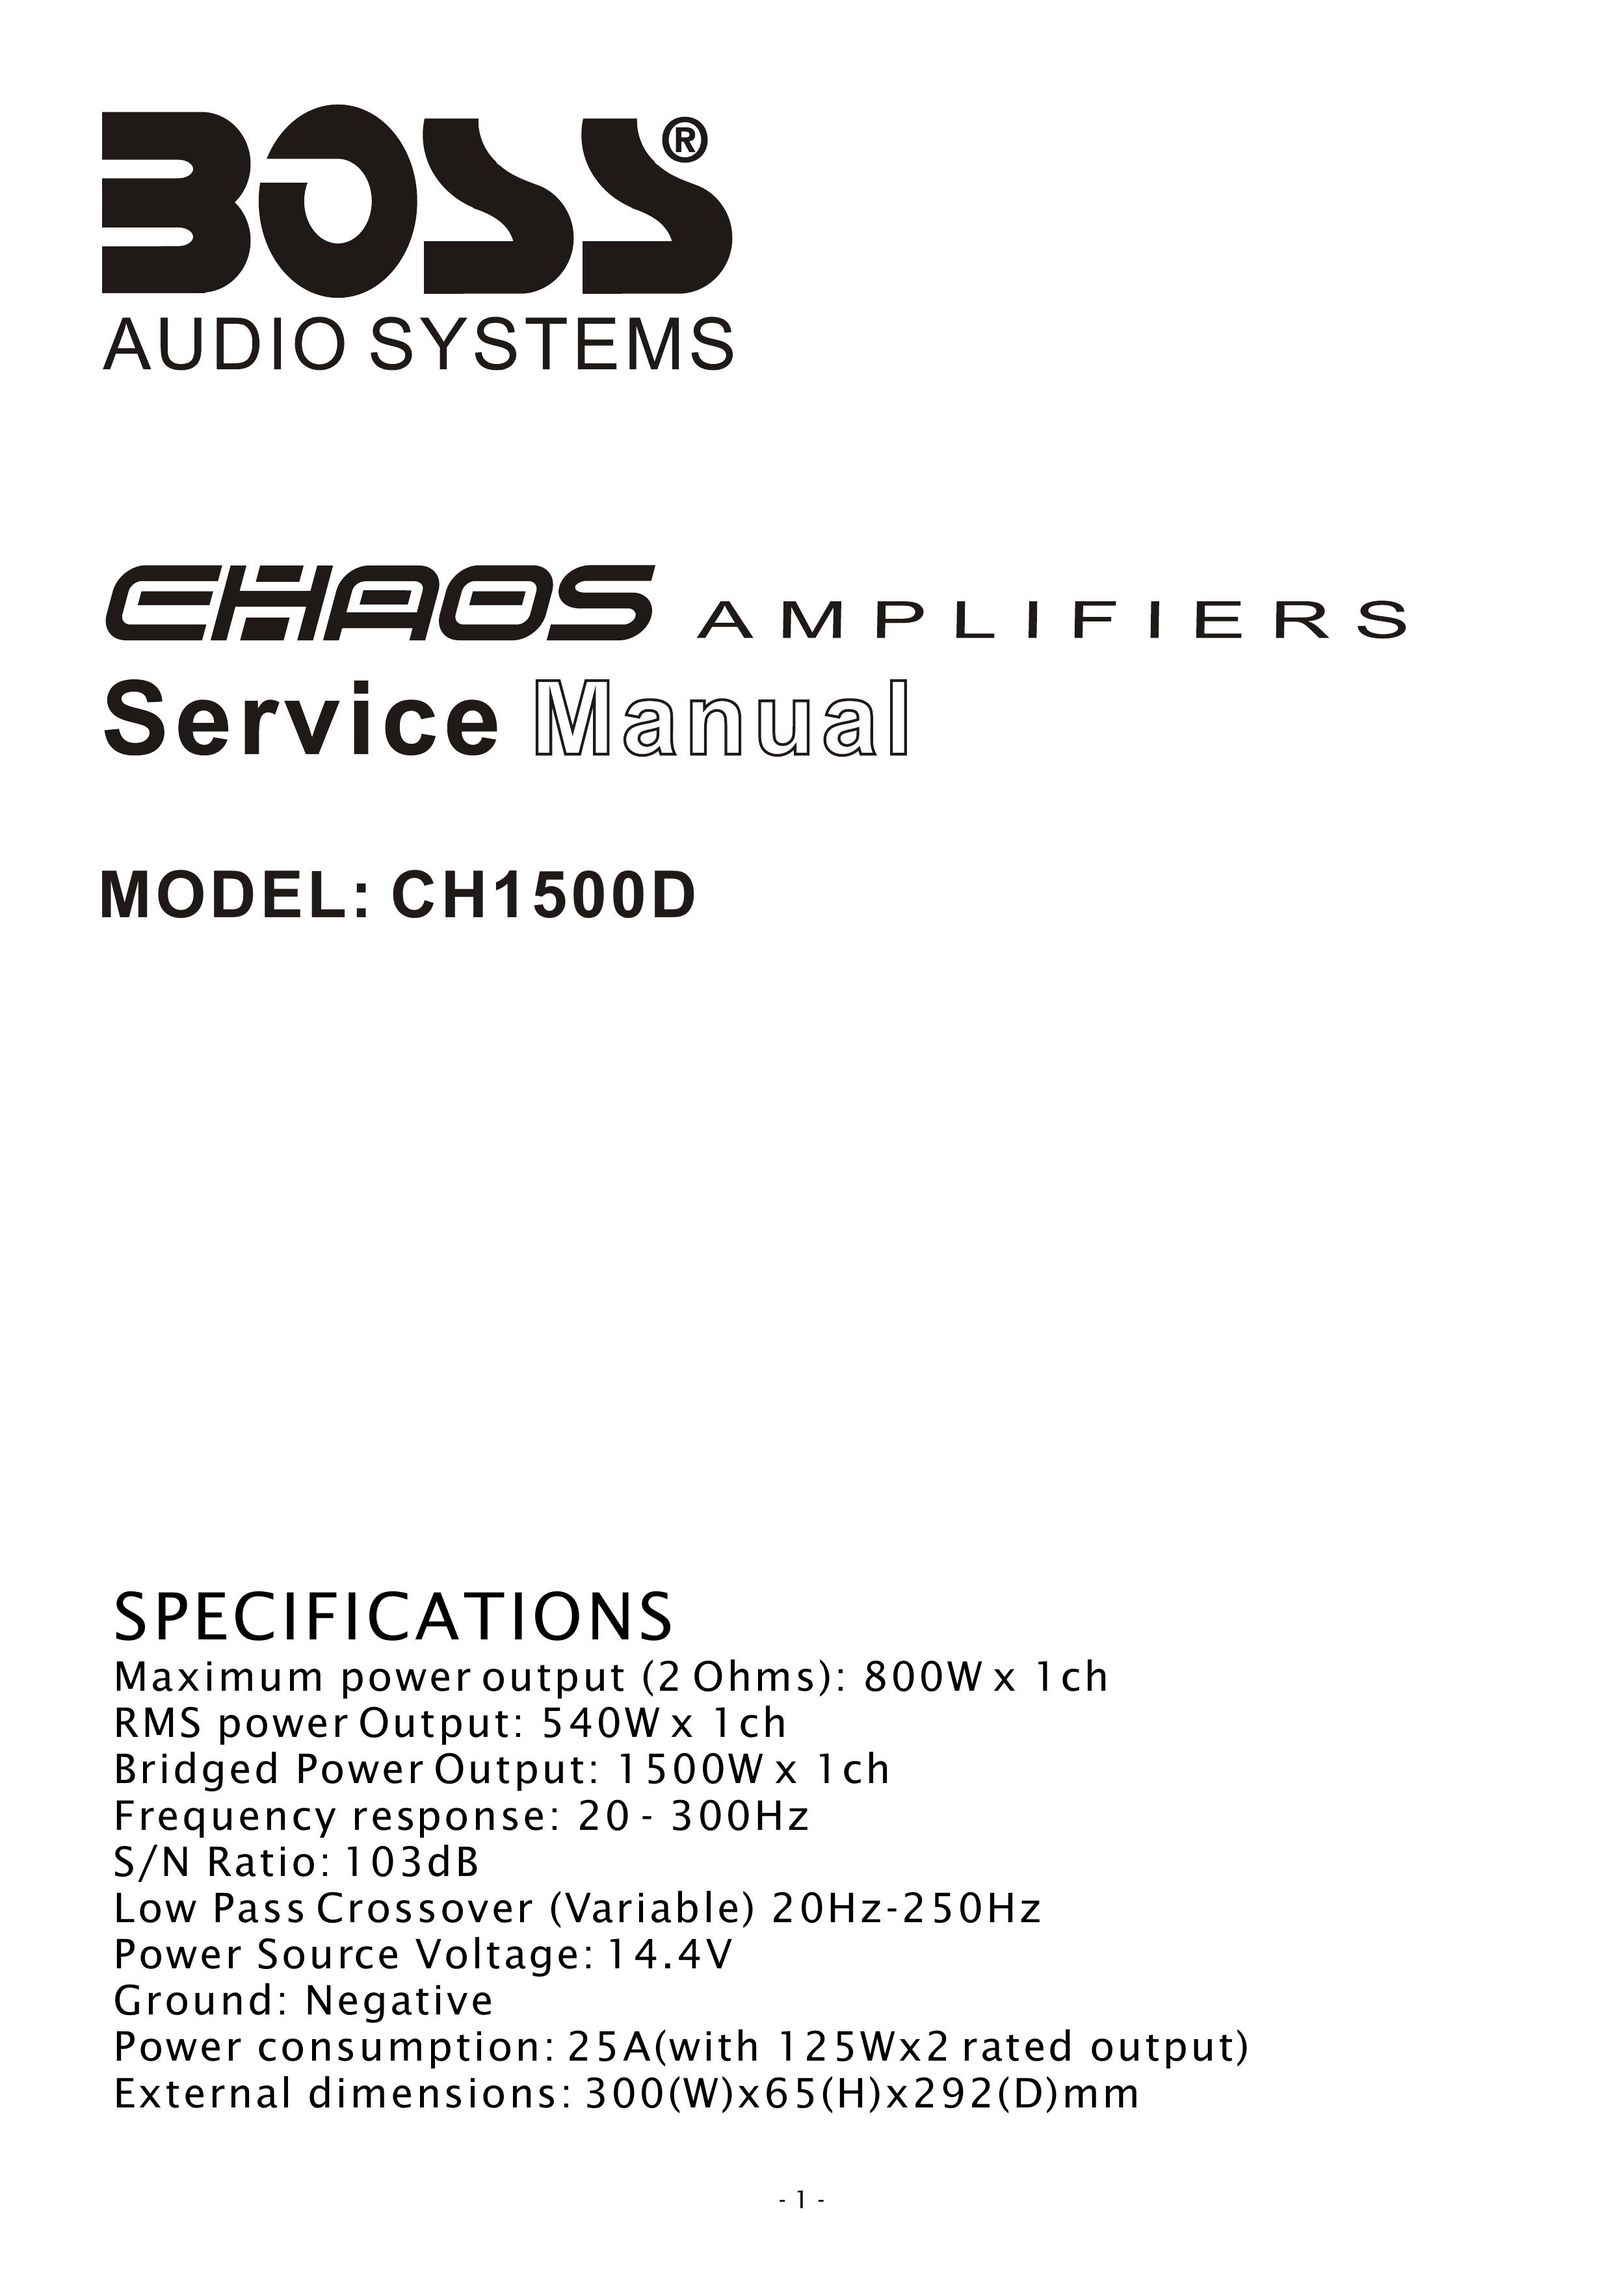 Boss Audio Systems CH1500D Car Amplifier User Manual